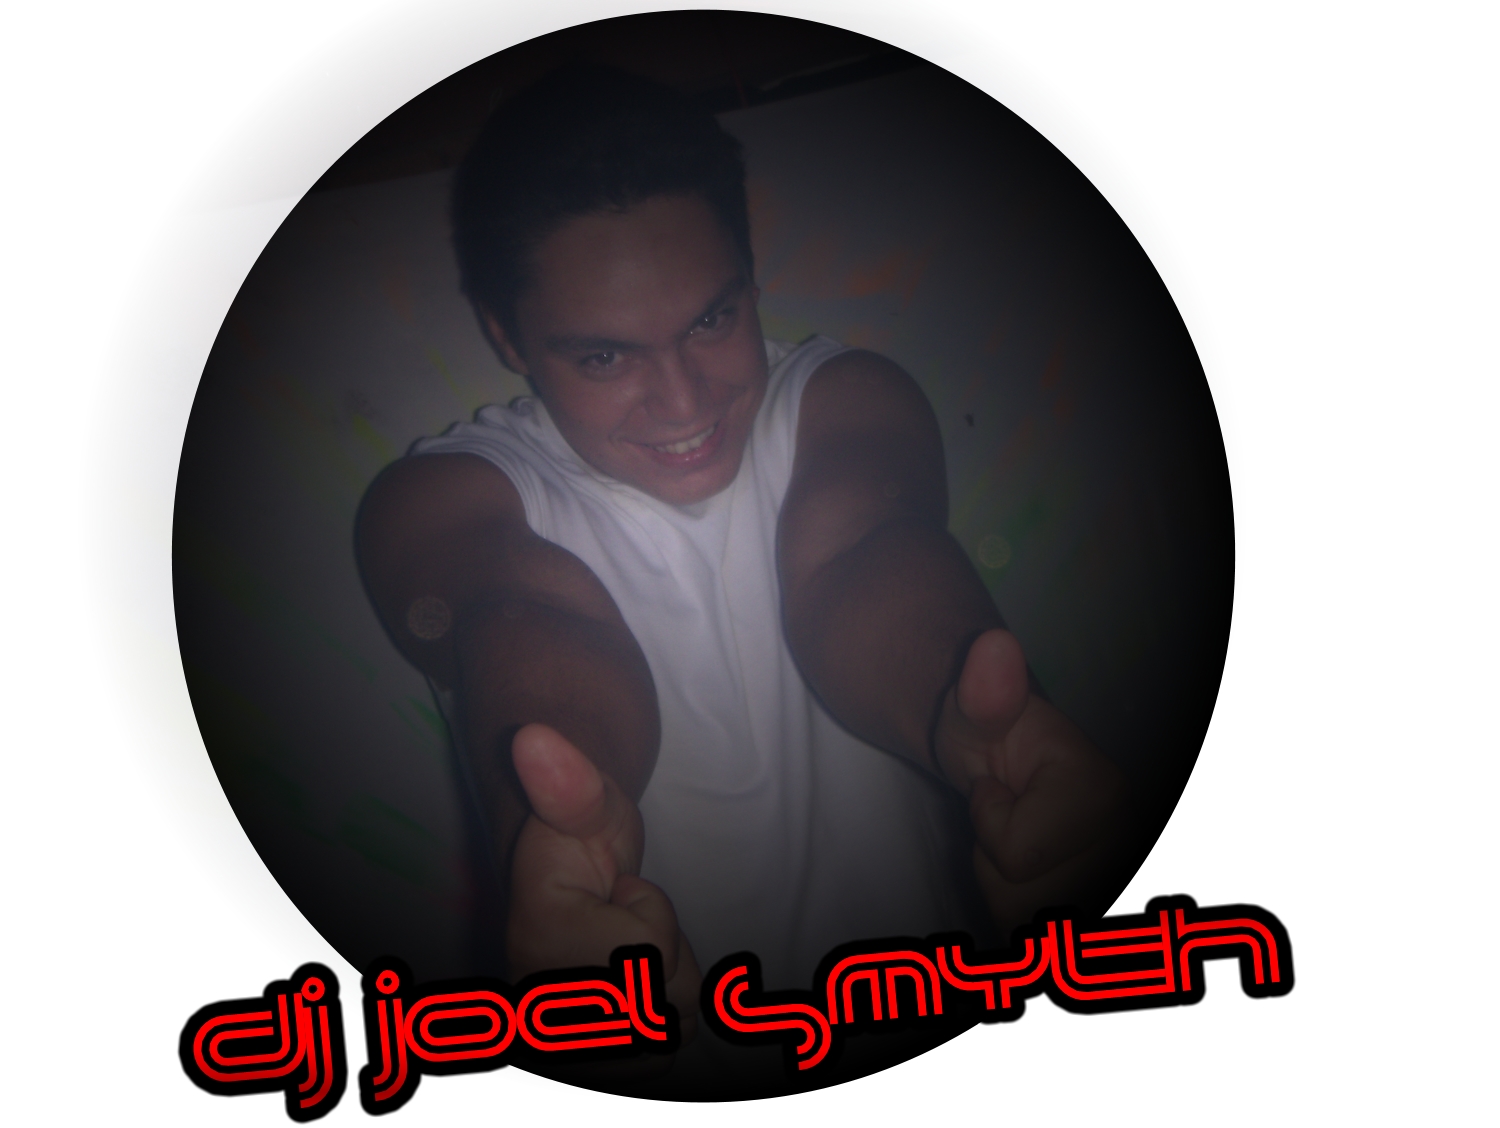 DJ Joel Smyth